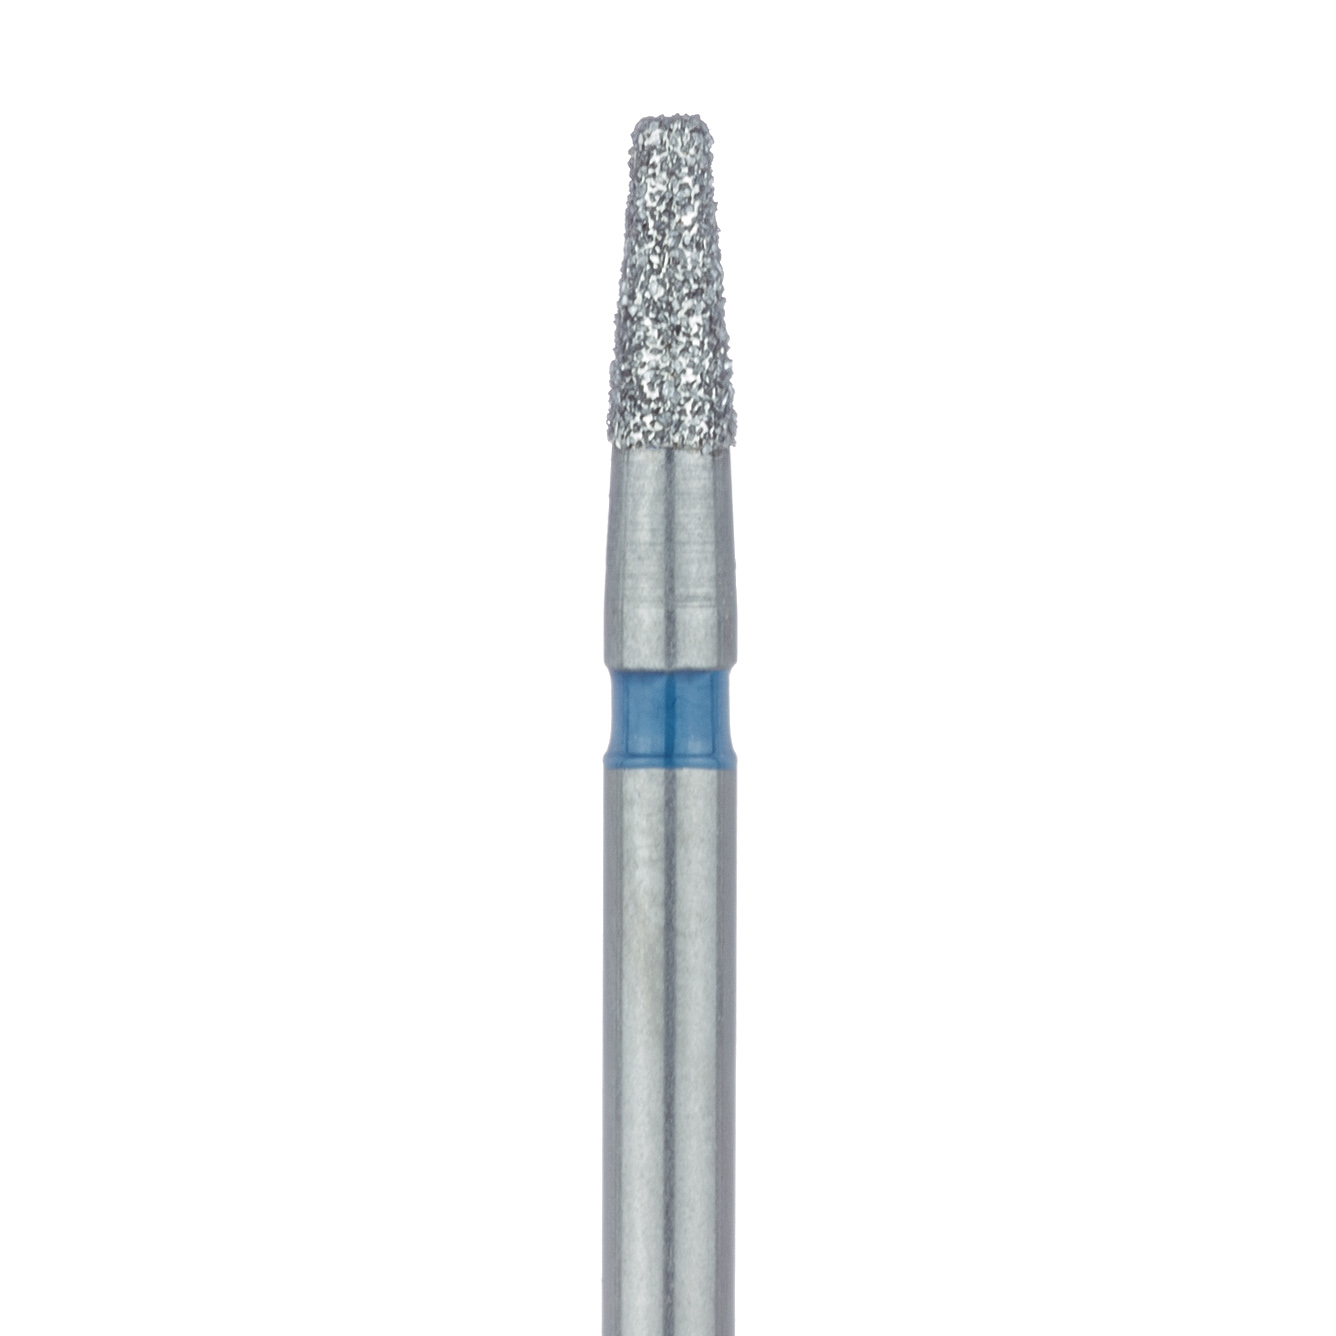 845-016-FG Flat End Taper Diamond Bur, 1.6mm Ø, Medium, 0.9mm Tip Ø, FG